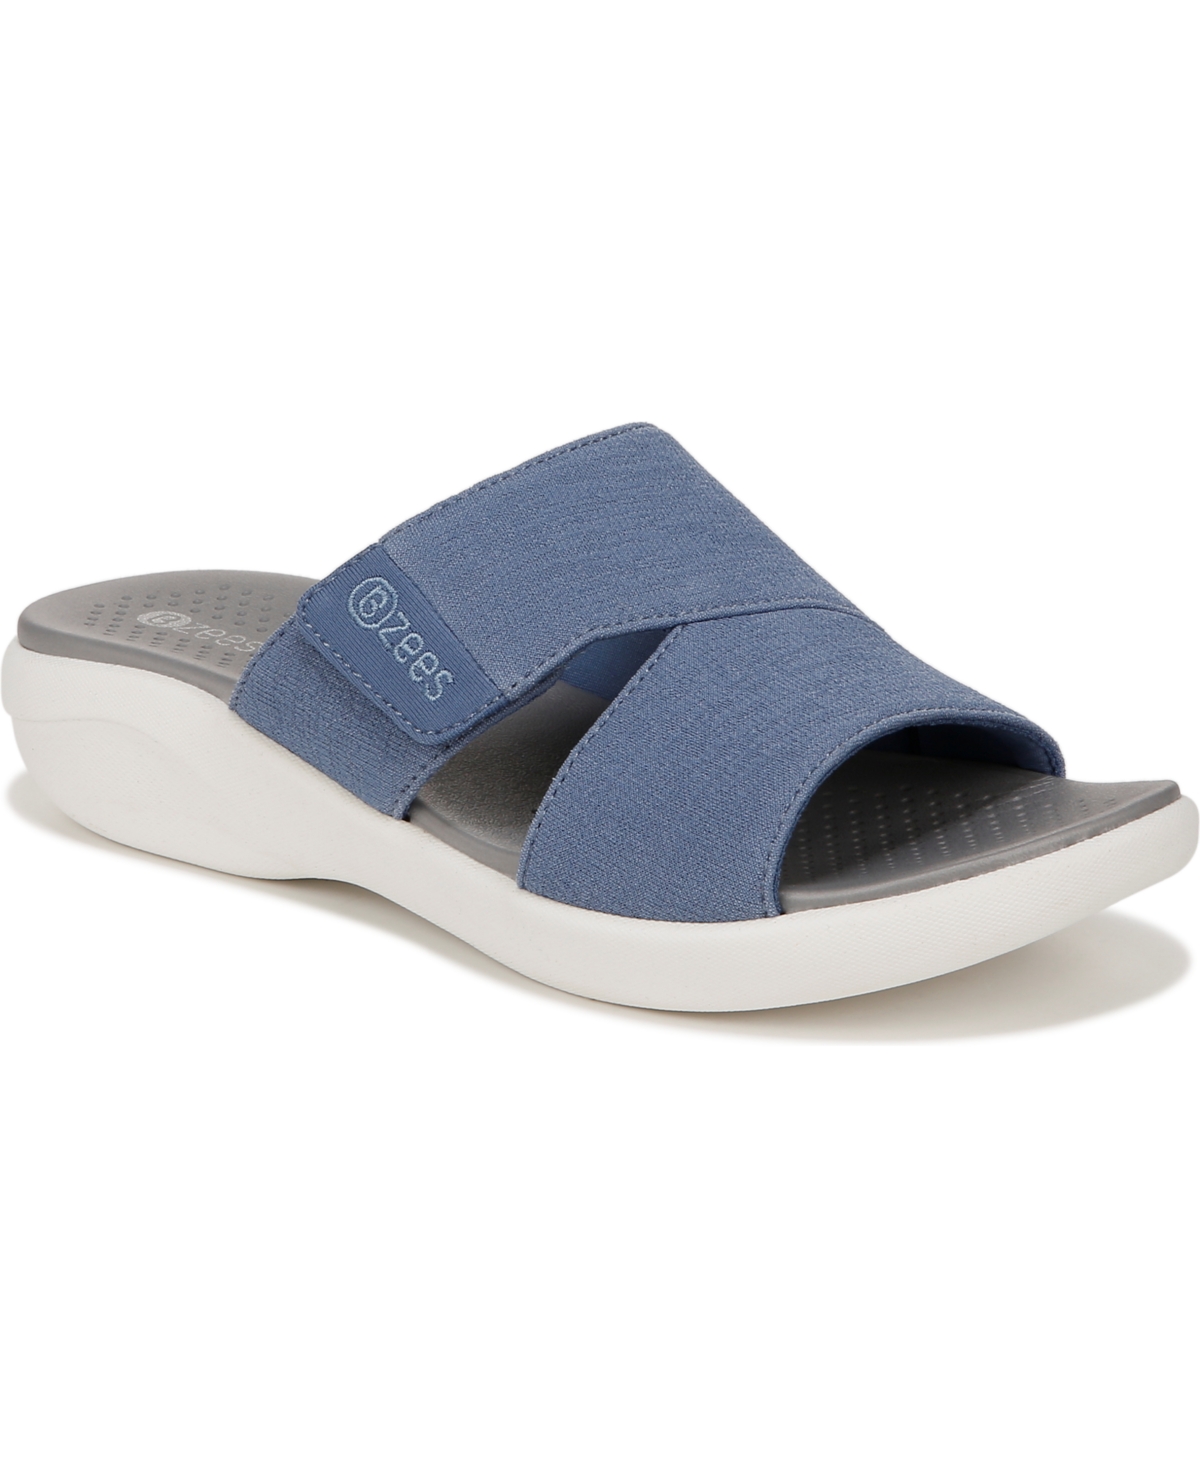 Carefree Washable Slide Sandals - Navy Blue Fabric